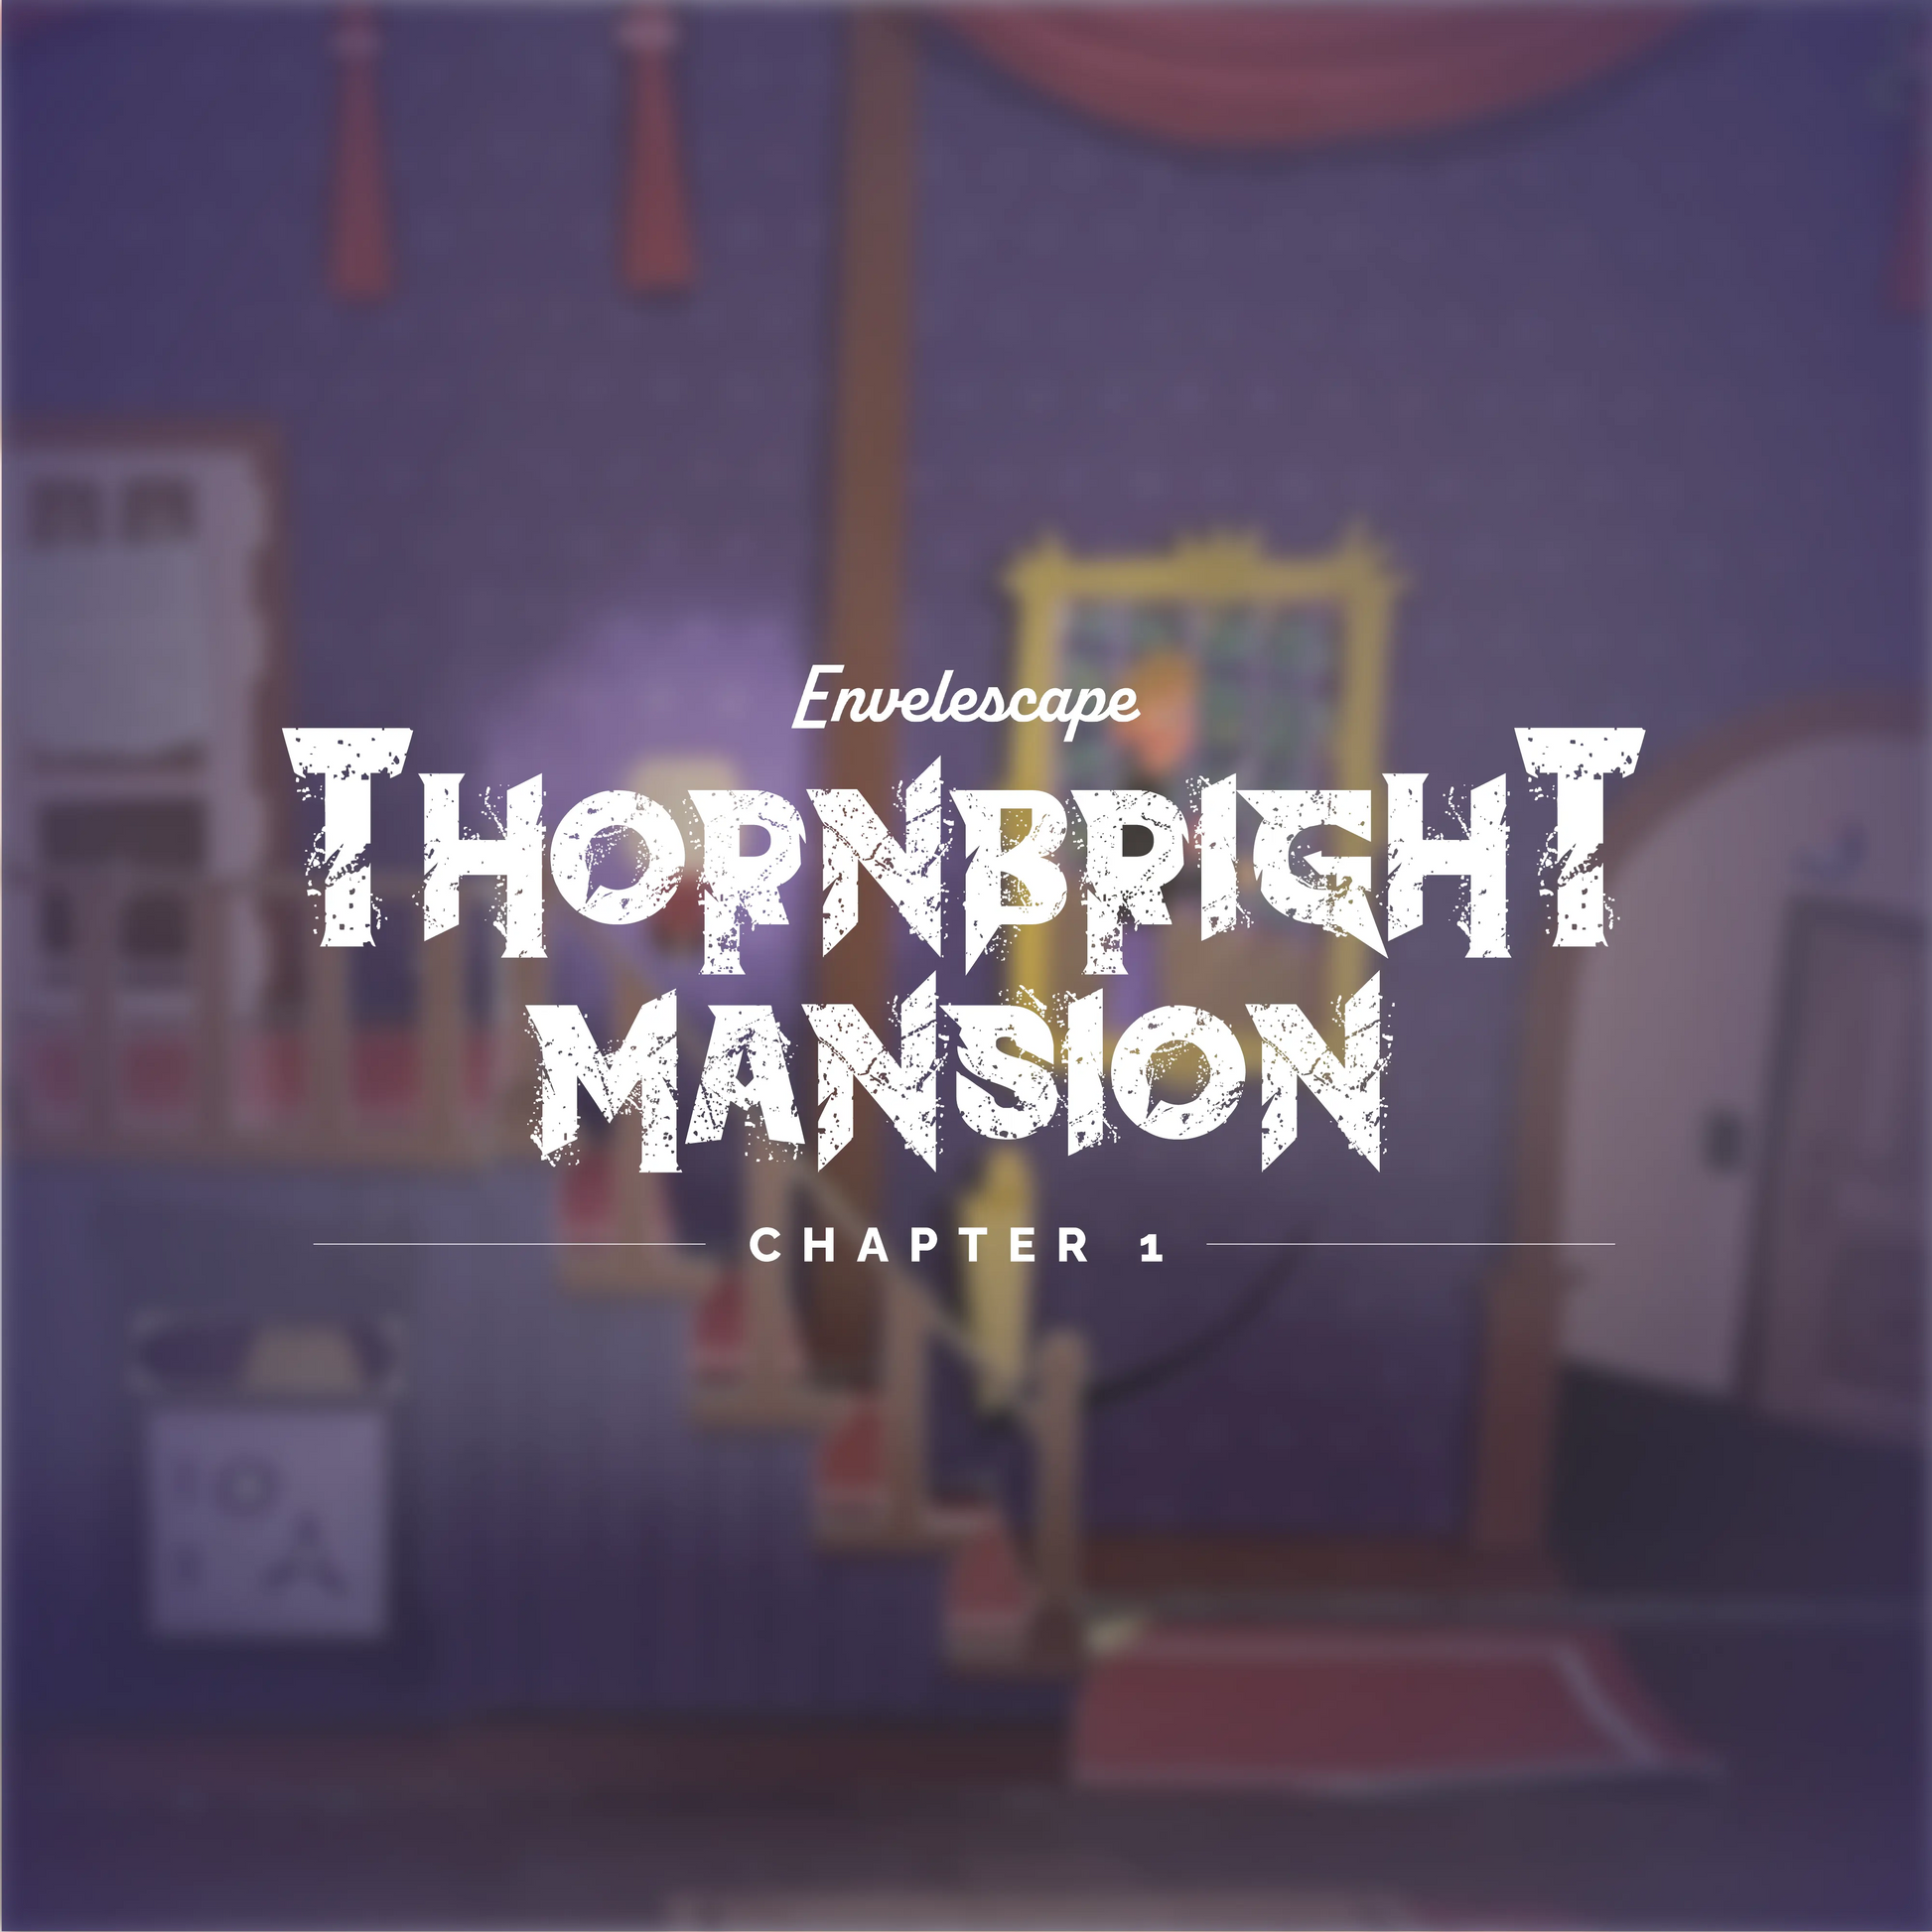 Thornbright Mansion: Chapter 1 Envelescape